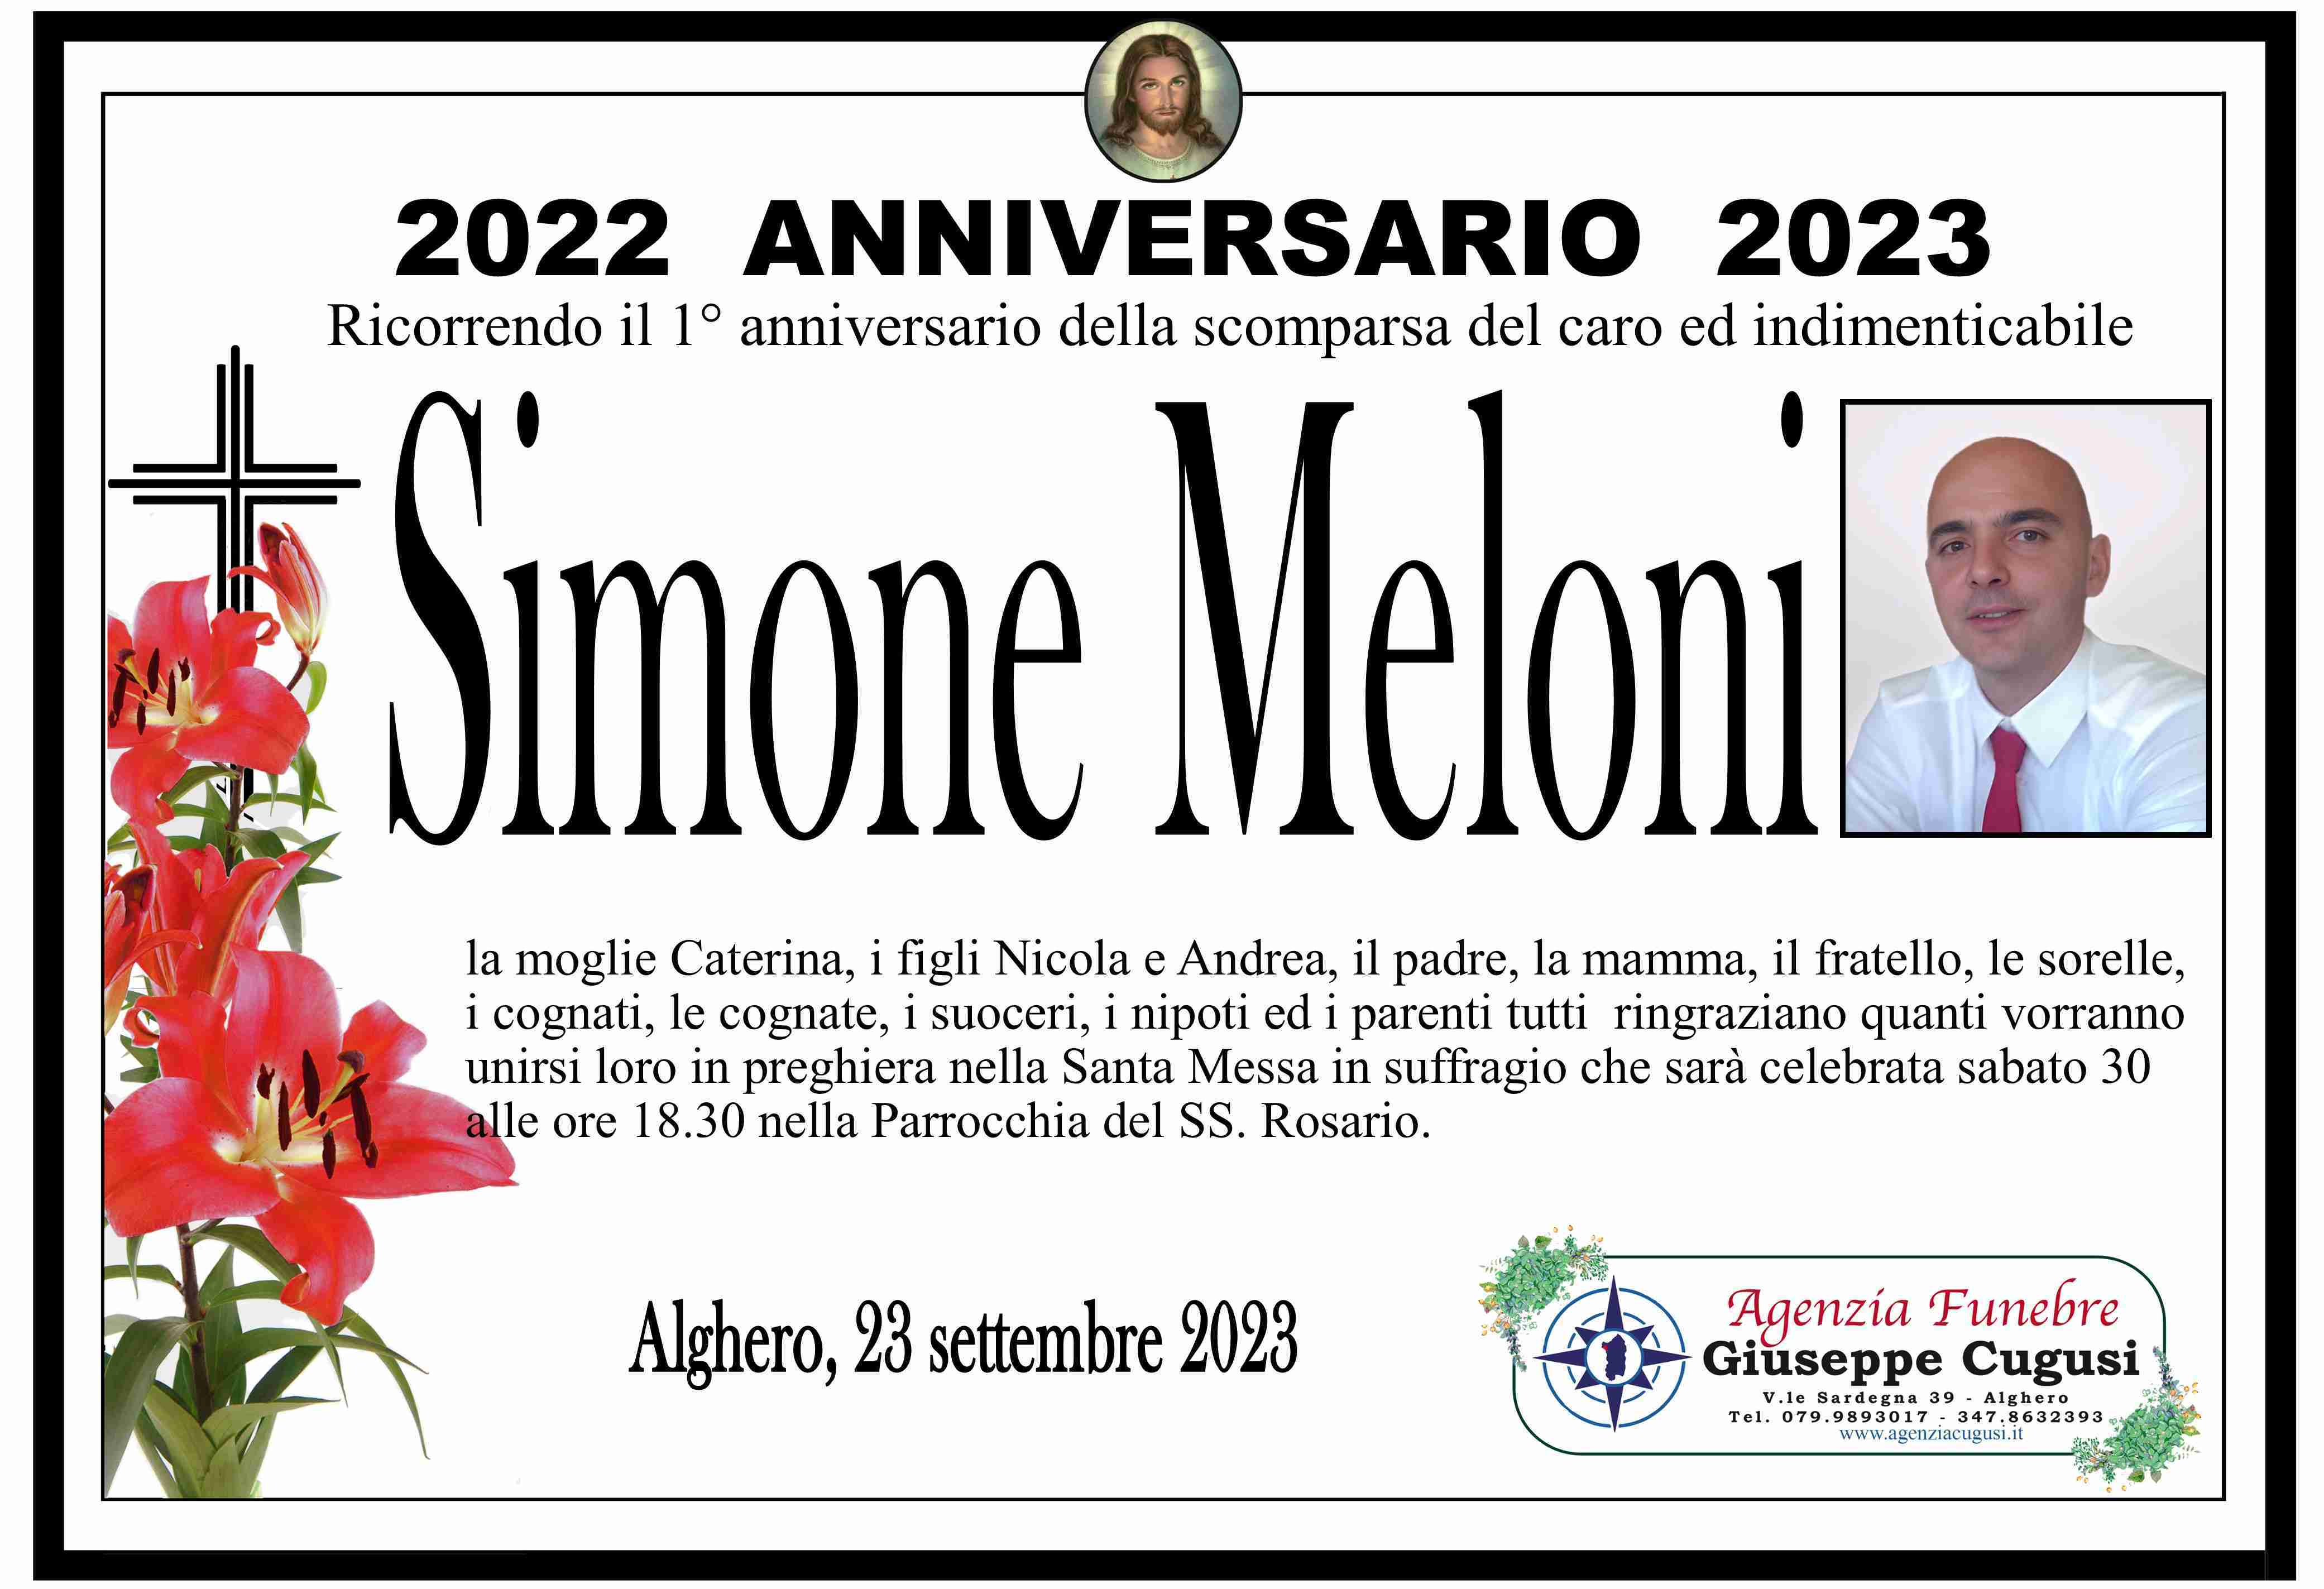 Simone Meloni